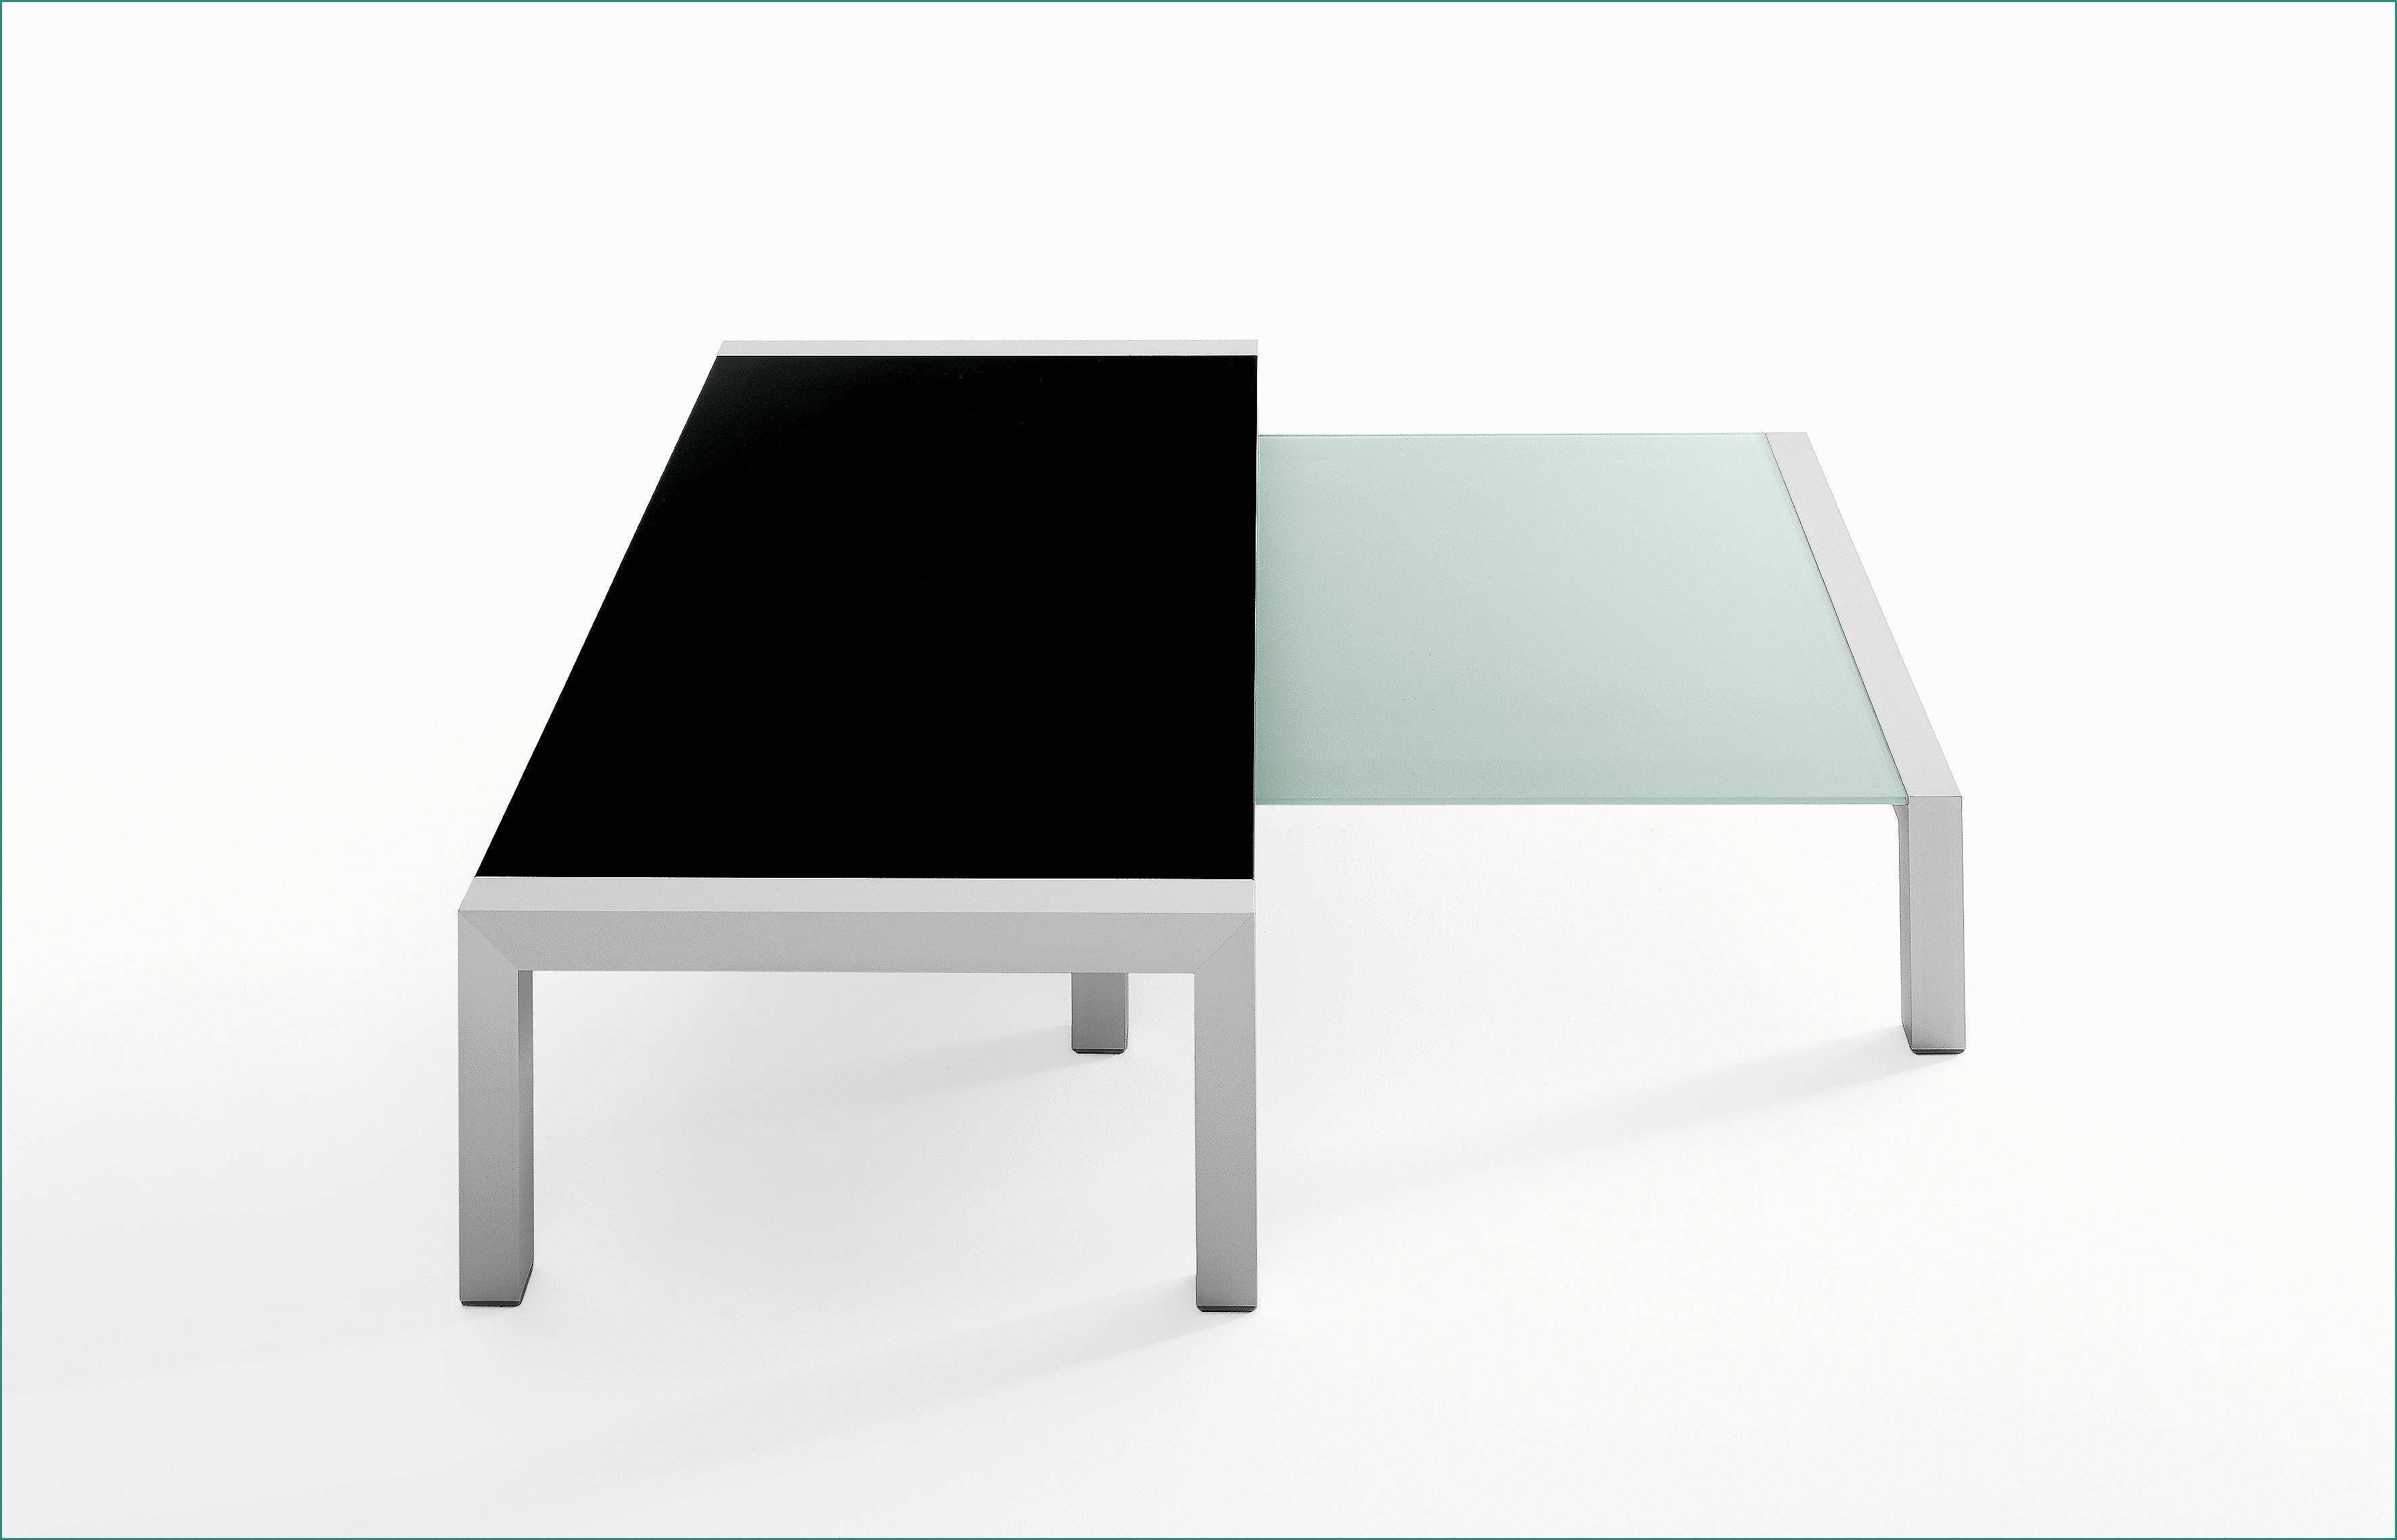 Passacavi Scrivania Leroy Merlin E Ca Passacavi Design Best Table with Palladio Structure and Bianco